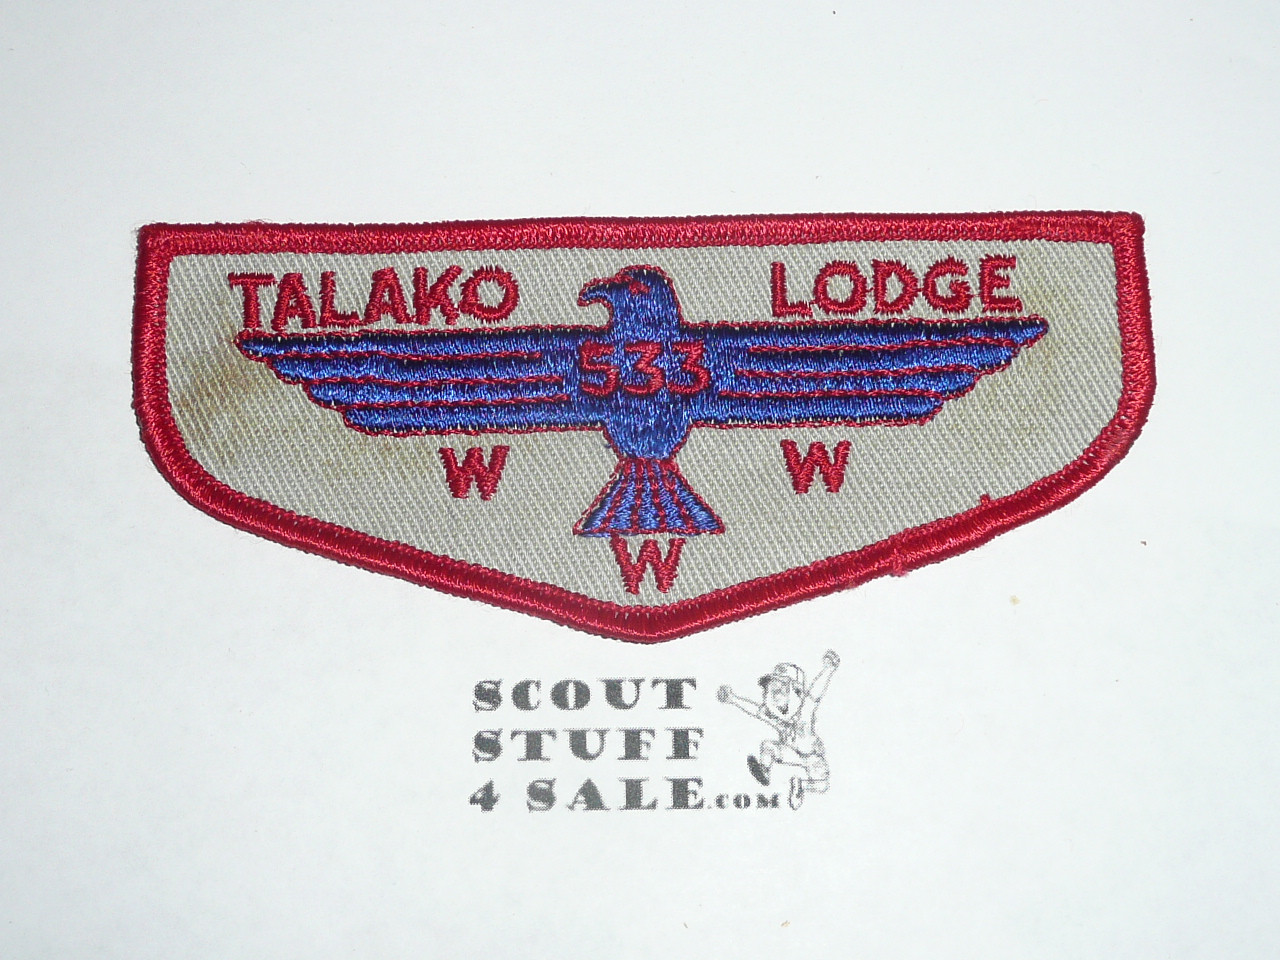 Order of the Arrow Lodge #533 Talako f1 Flap Patch, tiny bit of box soil